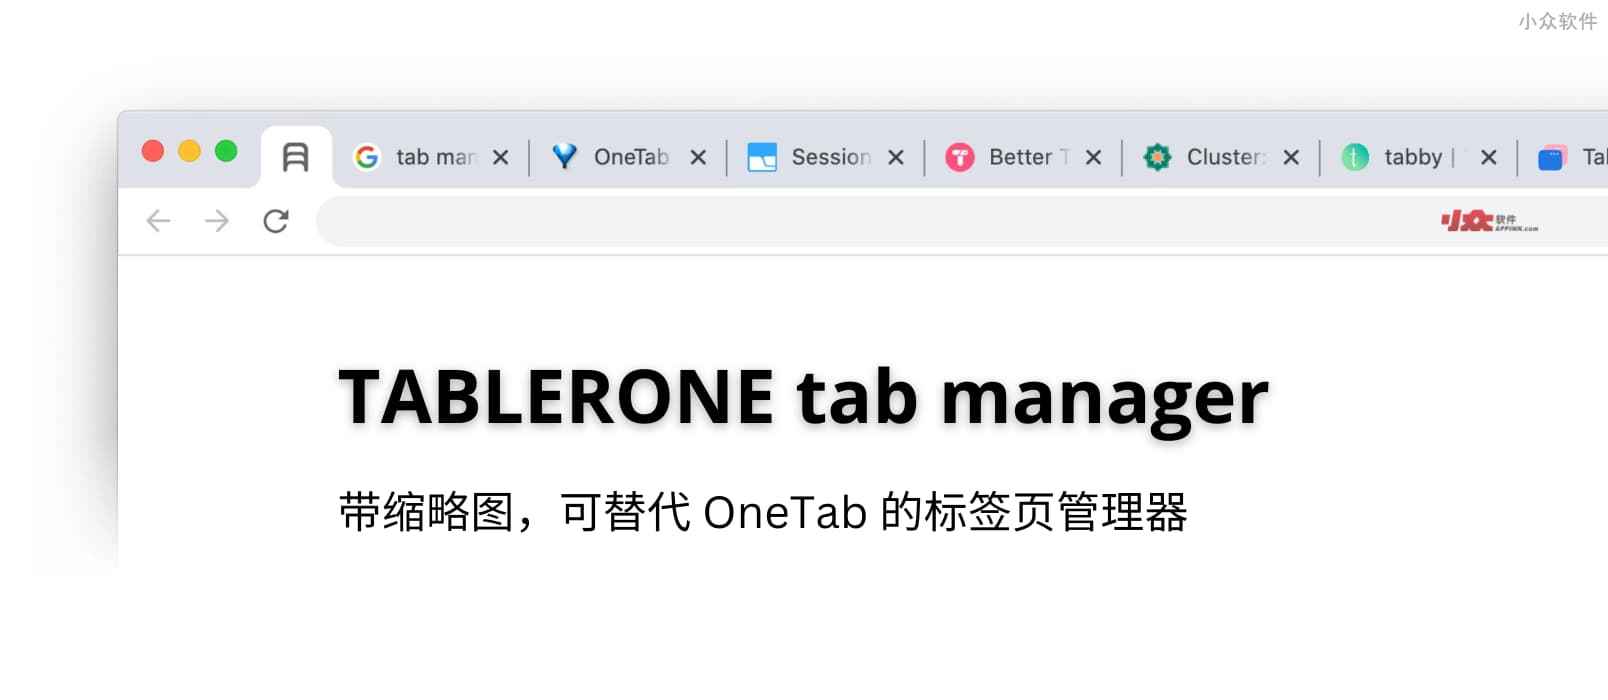 TABLERONE tab manager - 带缩略图，可替代 OneTab 的标签页管理器[Chrome] 9